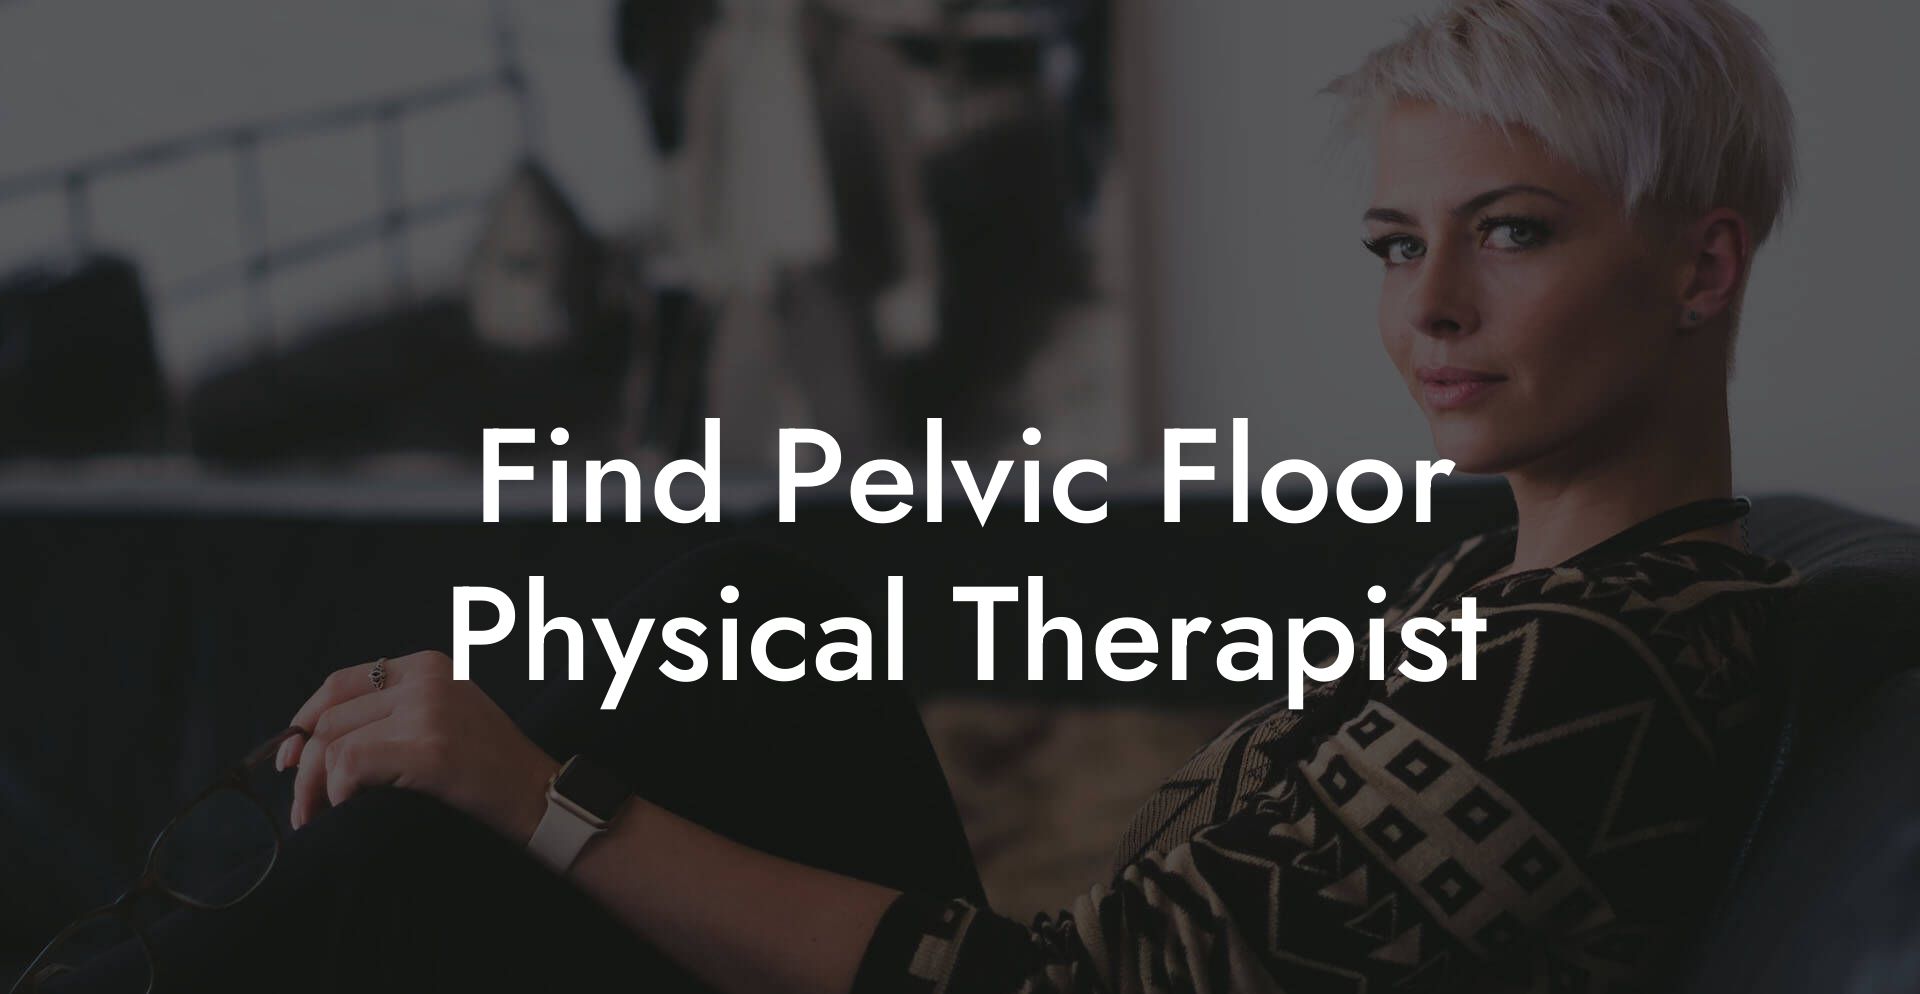 Find Pelvic Floor Physical Therapist